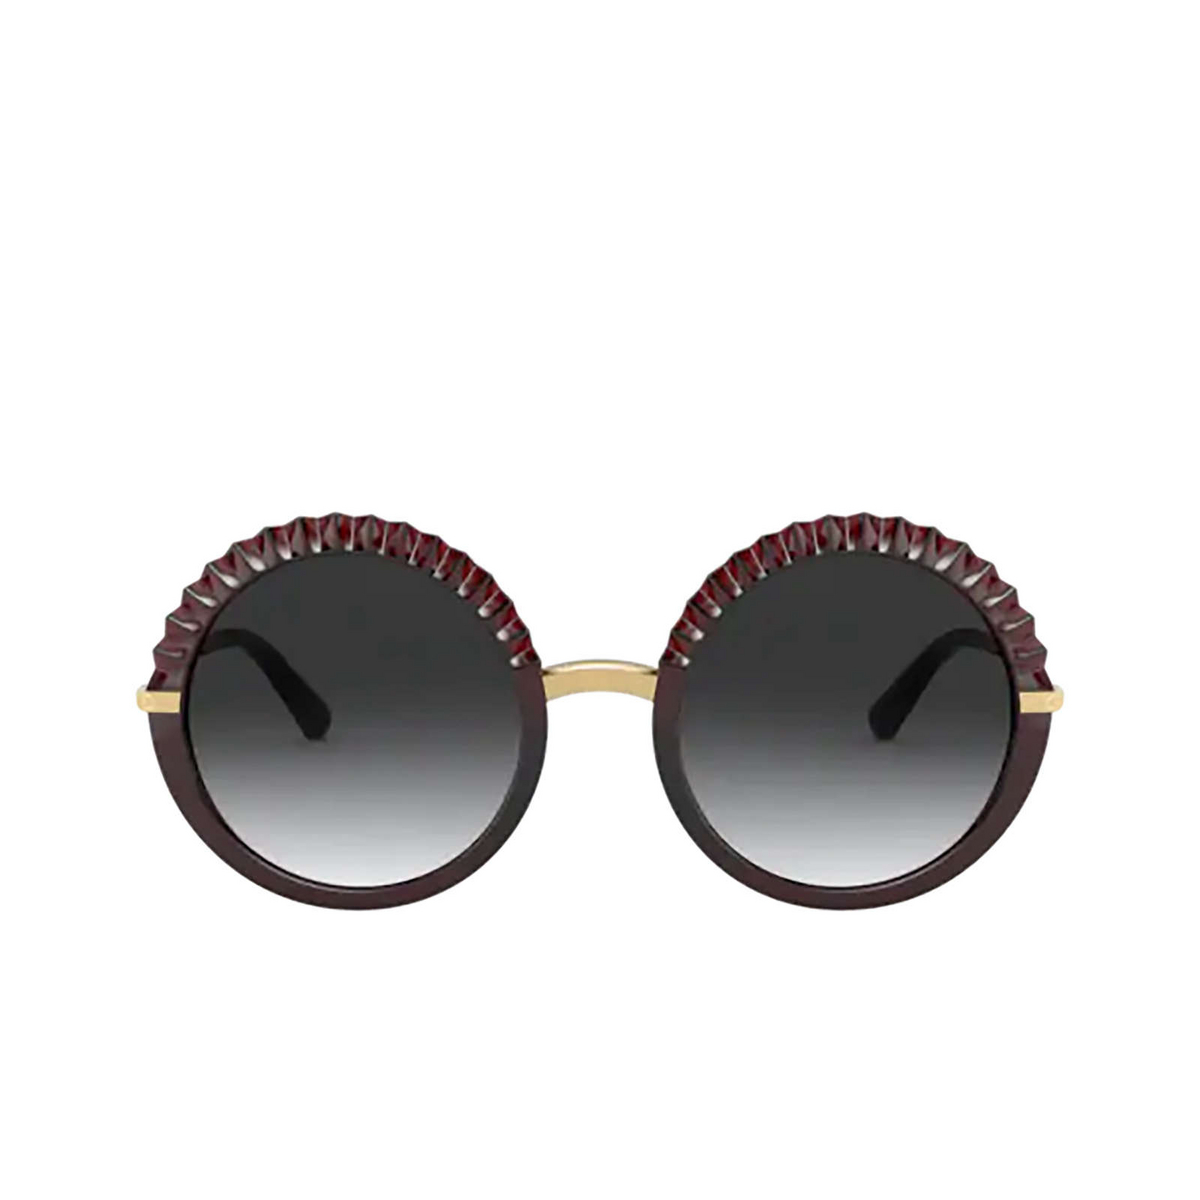 Dolce & Gabbana® Round Sunglasses: DG6130 color 550/8G Transparent Red - 1/3